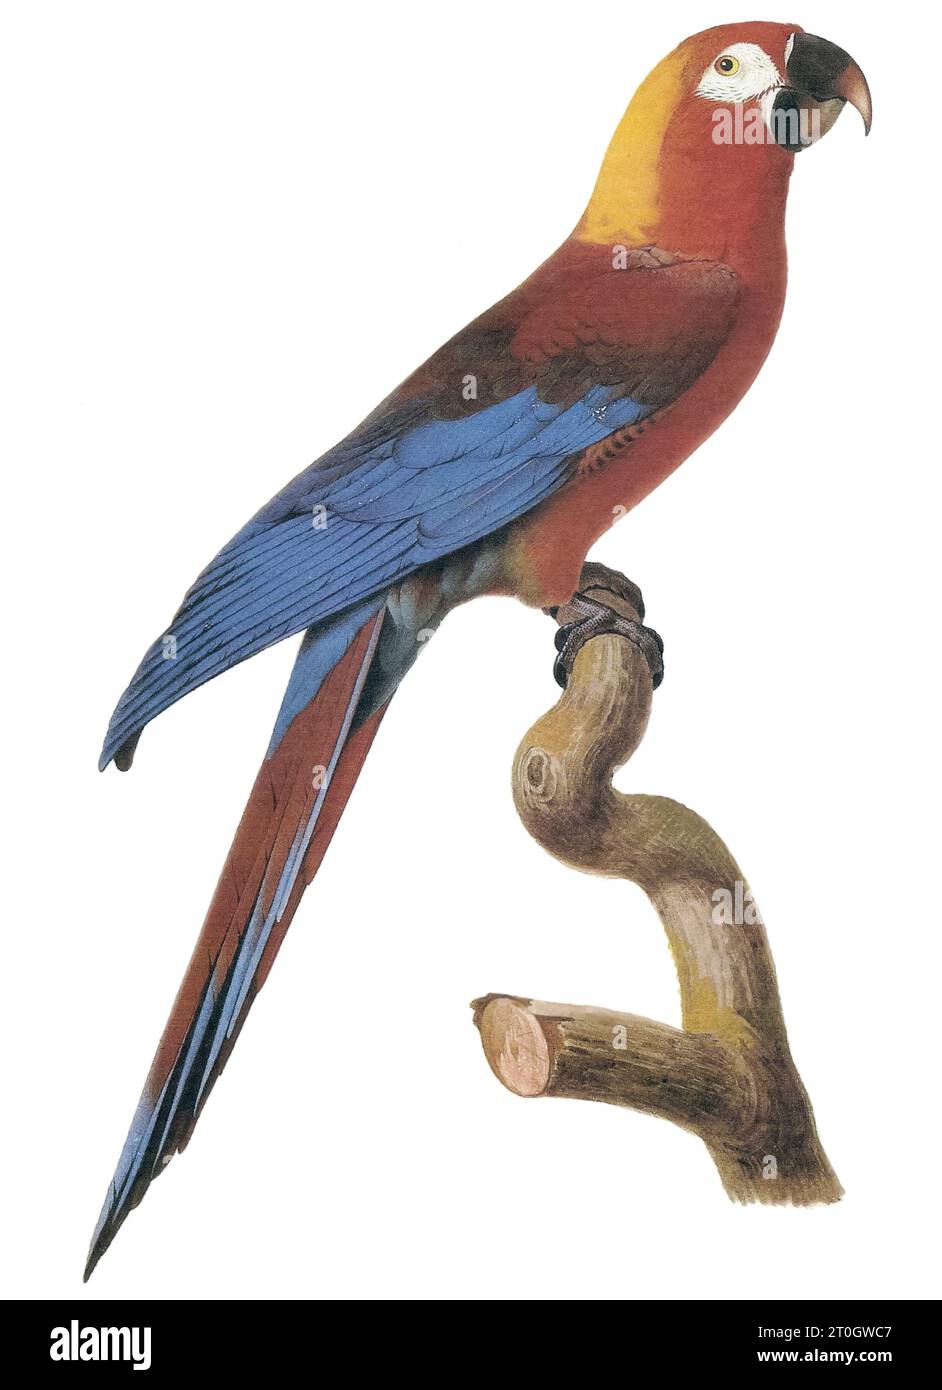 Hispaniolan macaw, illustration Stock Photo